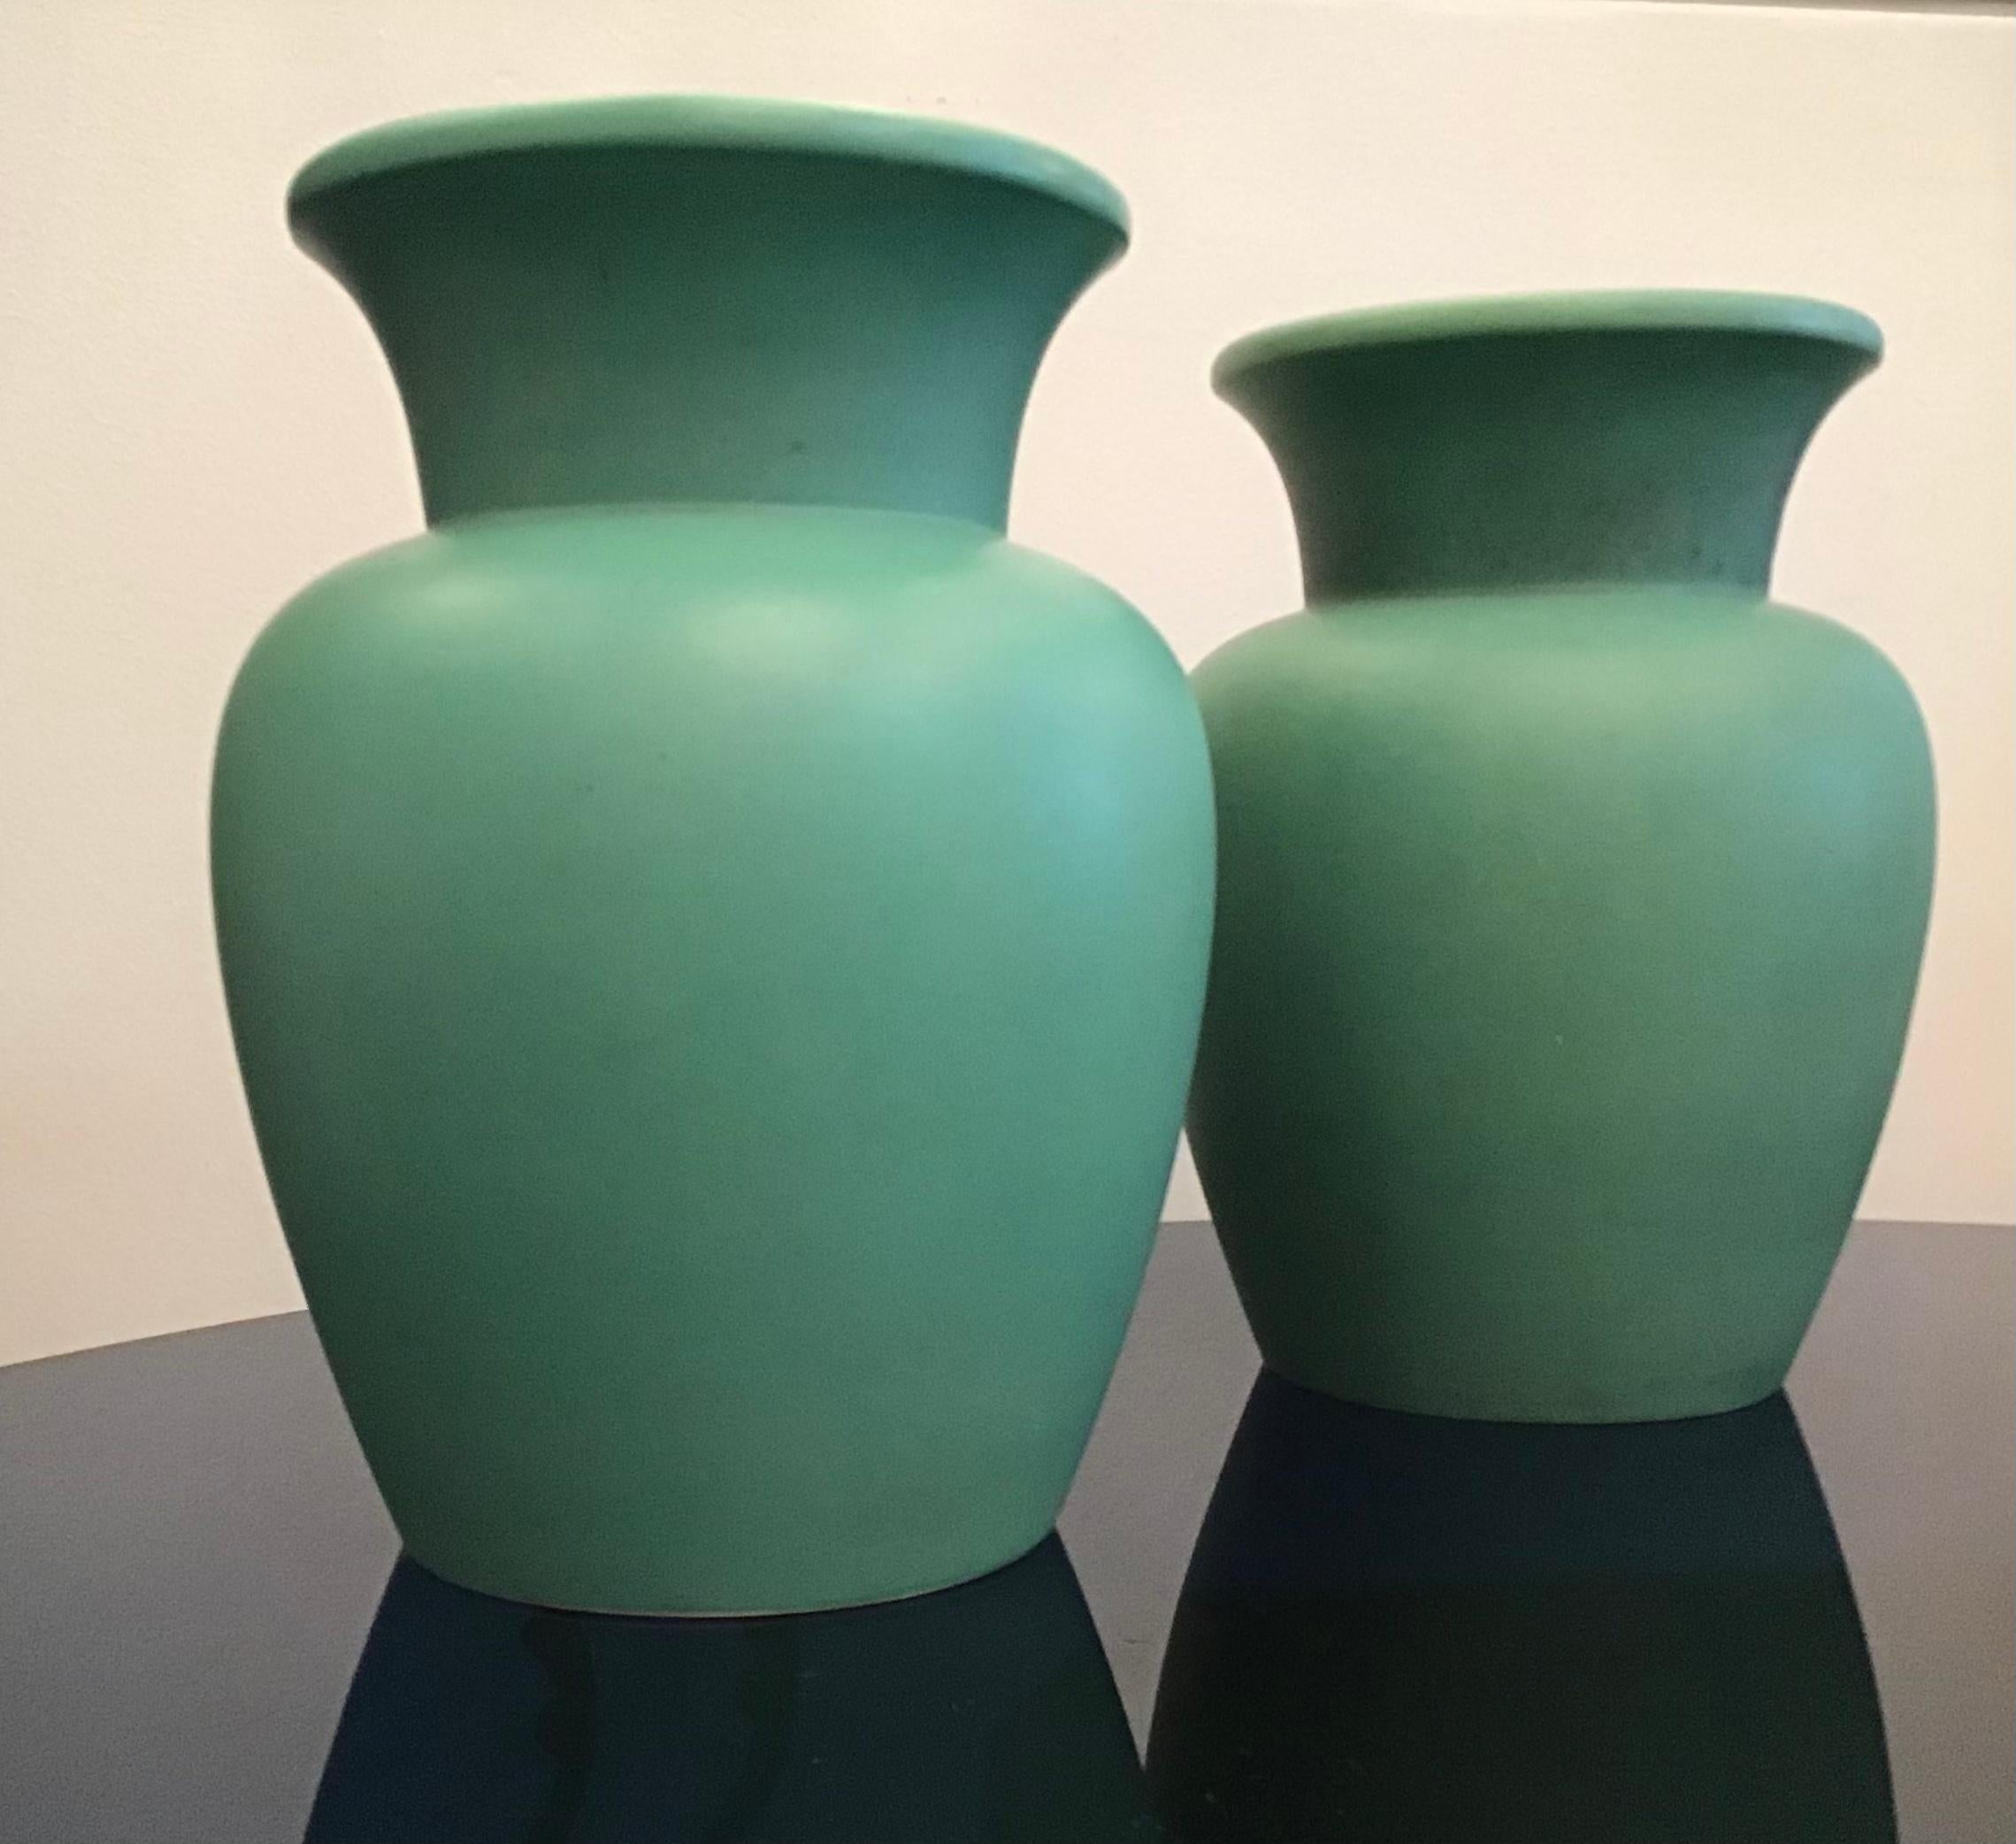 Richard Ginori Giovanni Gariboldi Couple vases green ceramic, 1950, Italy.